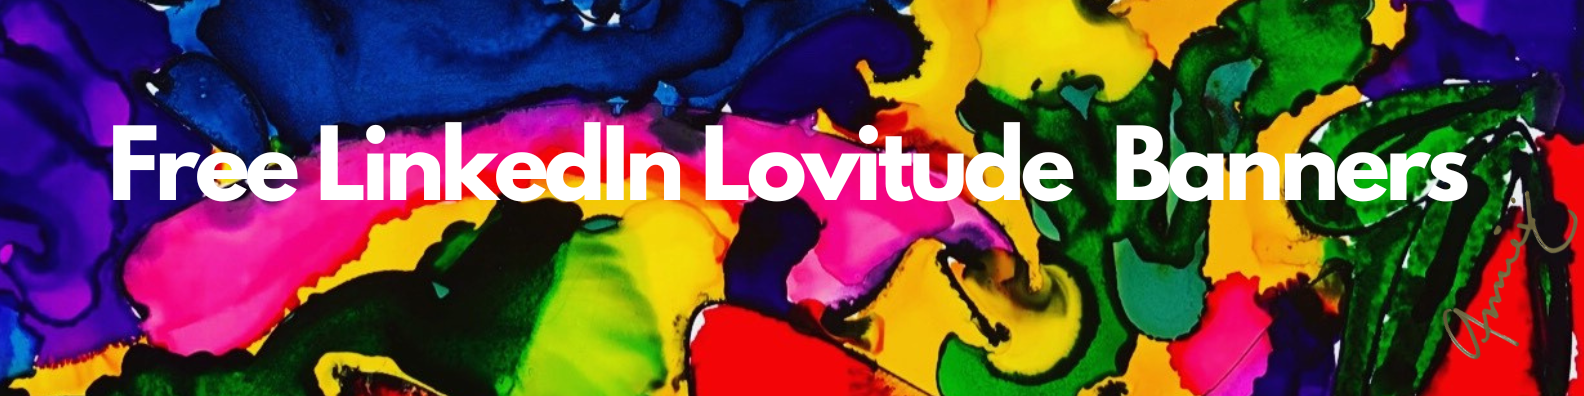 FREE LinkedIn Banner Images: Make Your Profile Pop! Lovitude™ Soul Paintings